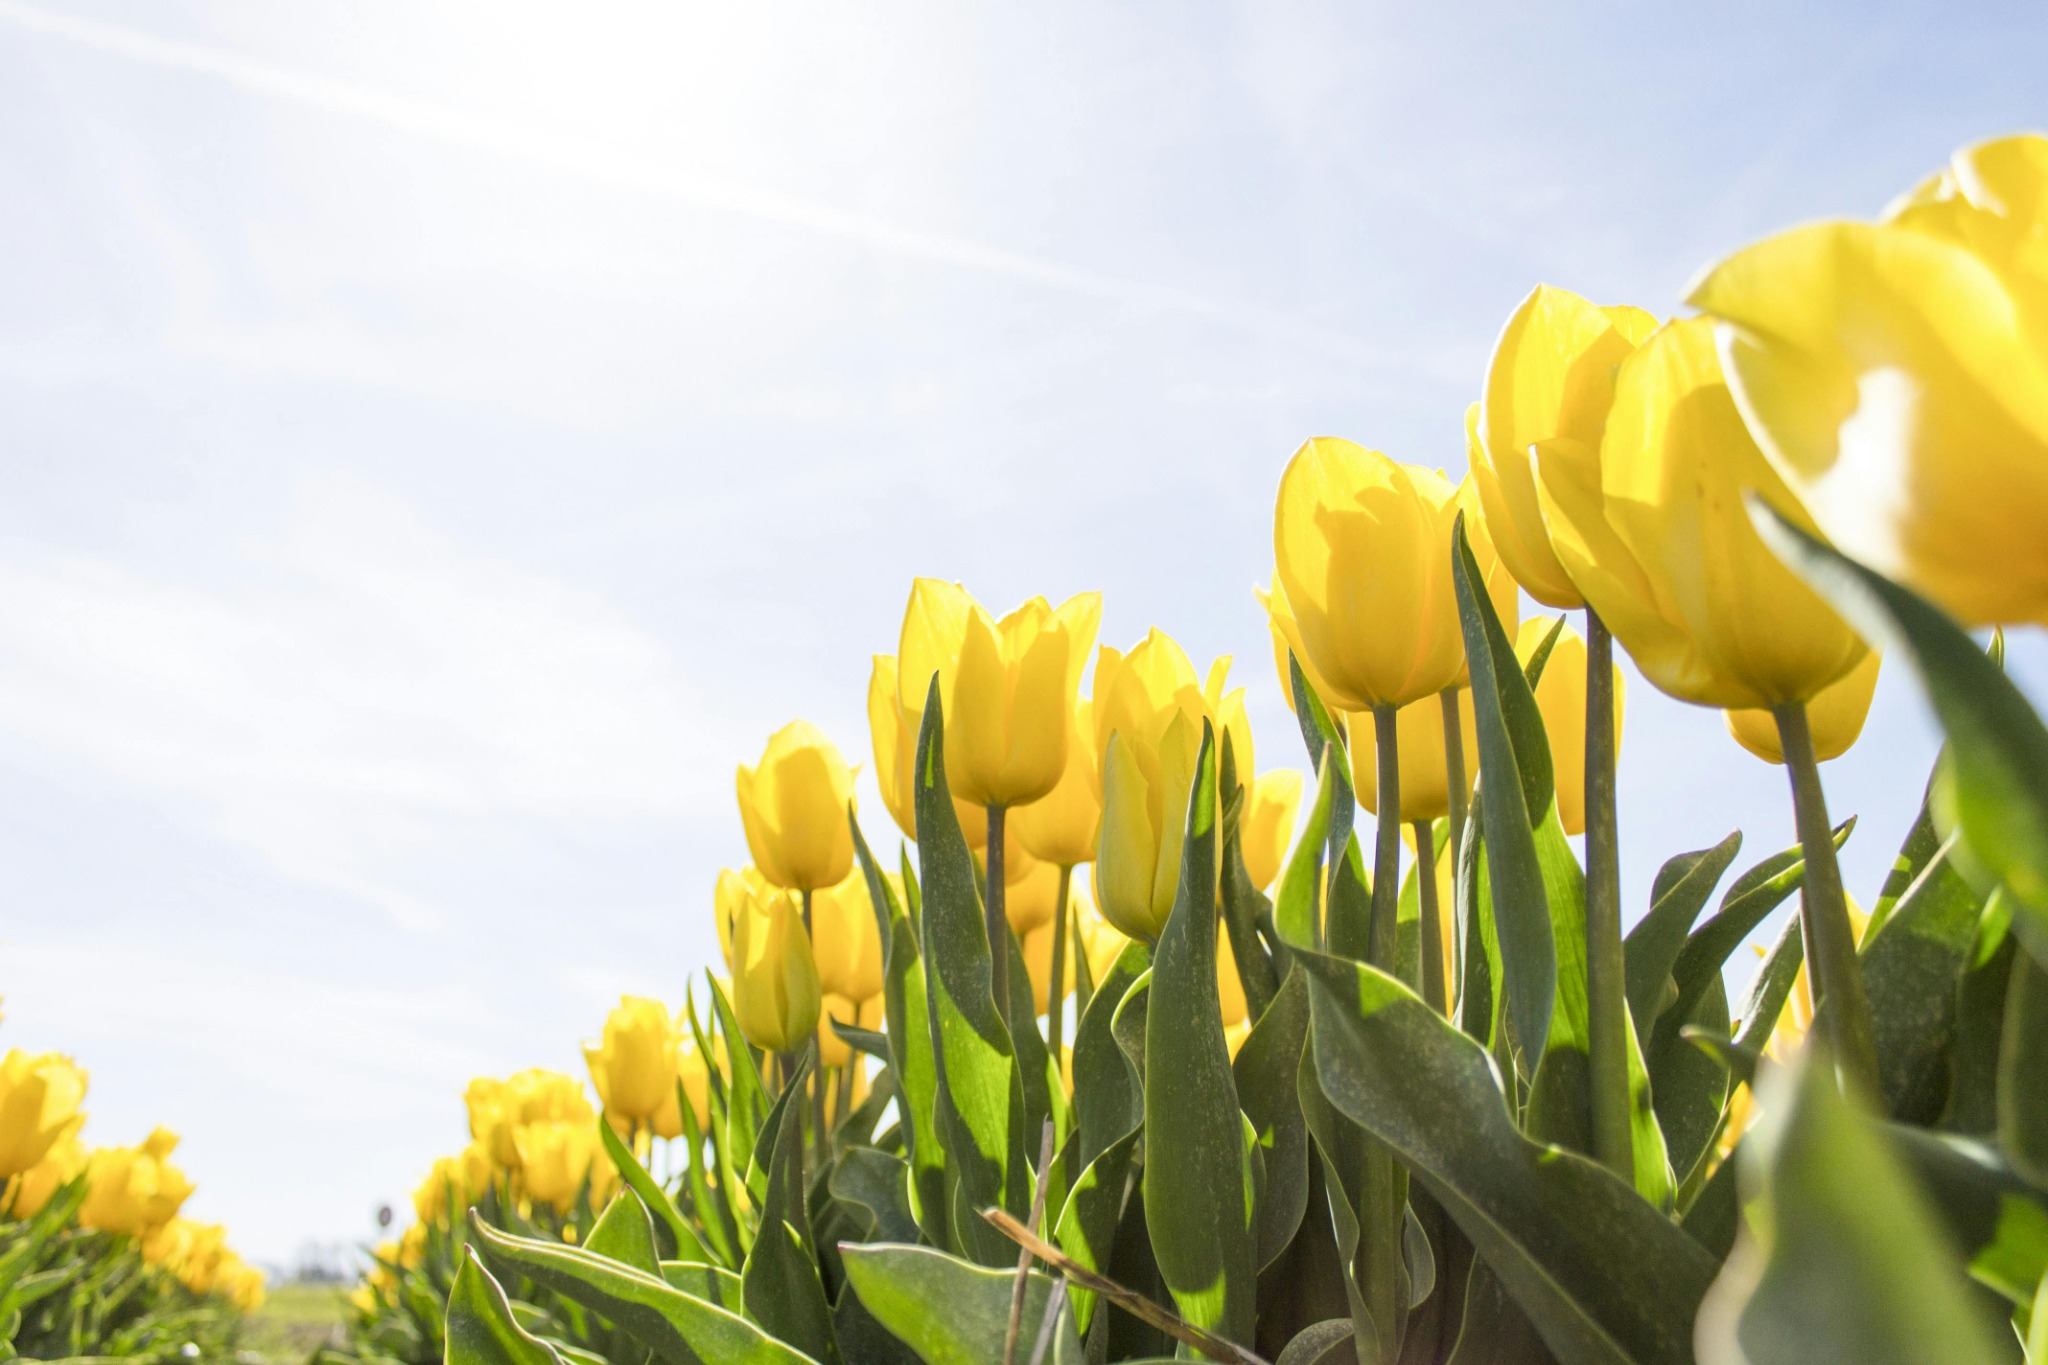 Yellow tulips blue sky low angle